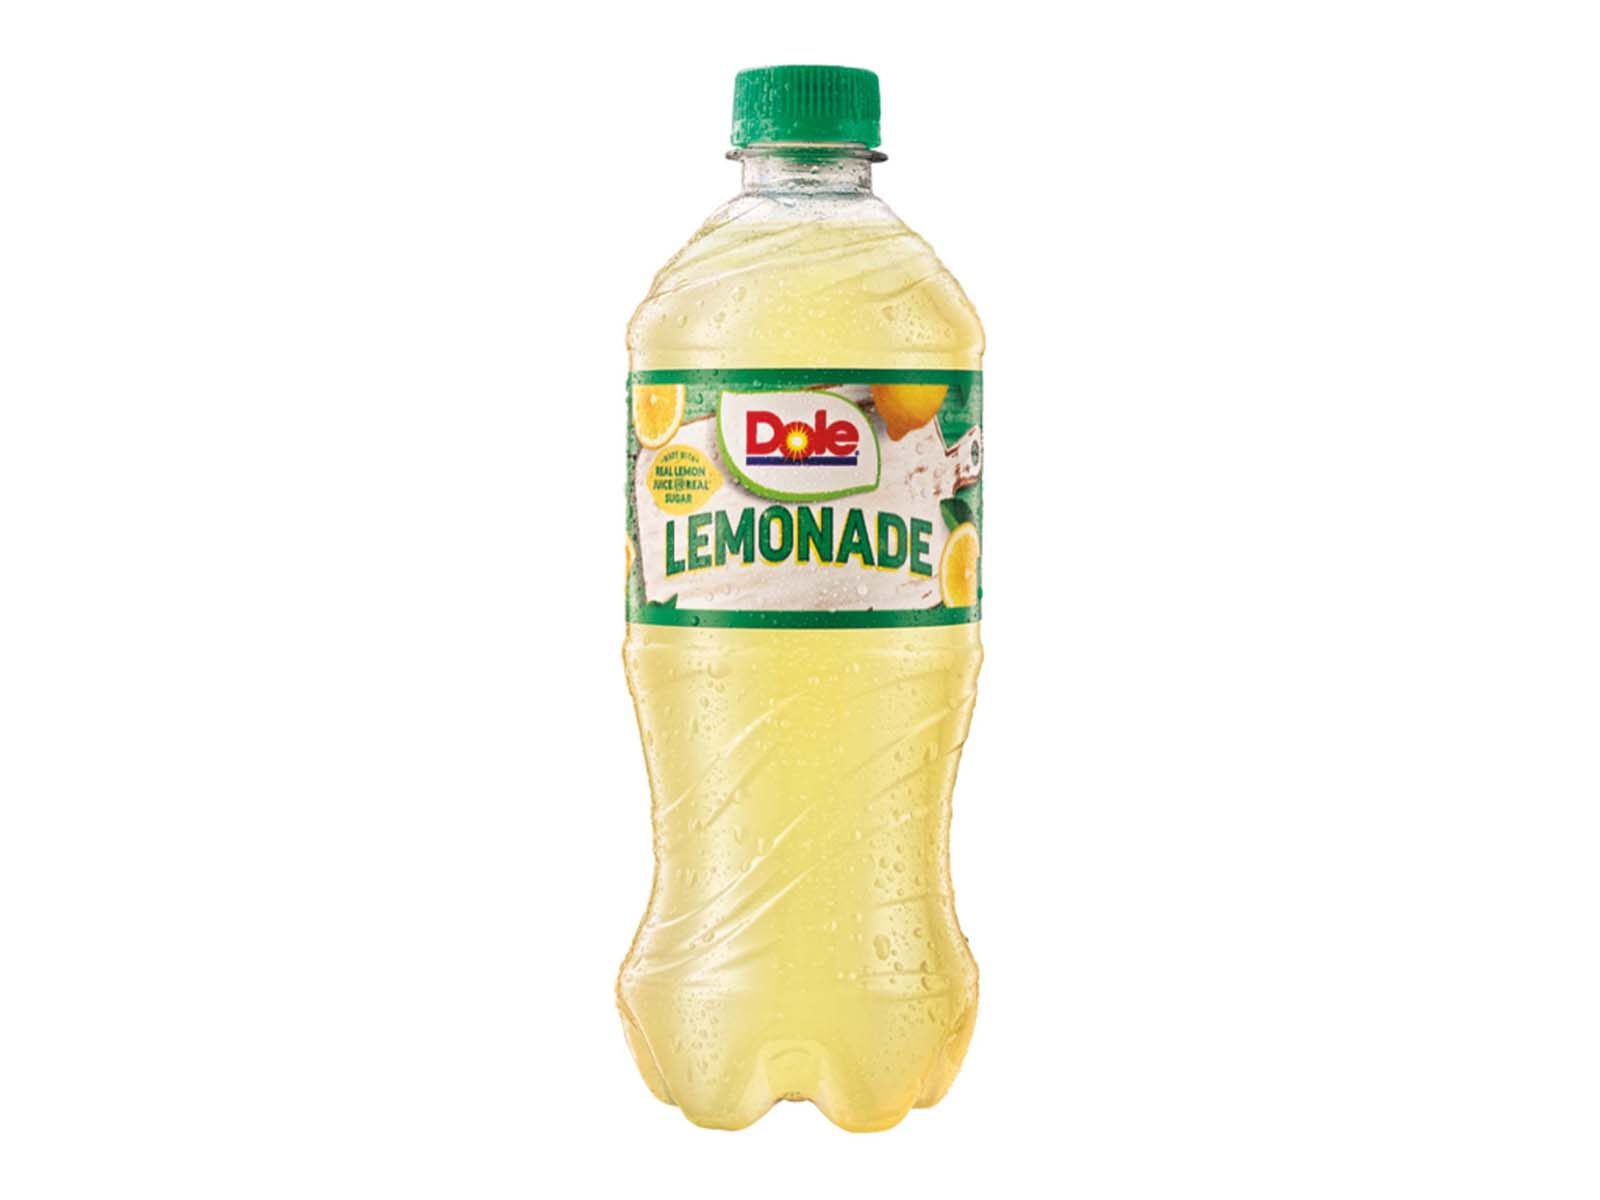 Dole Lemonade Bottle